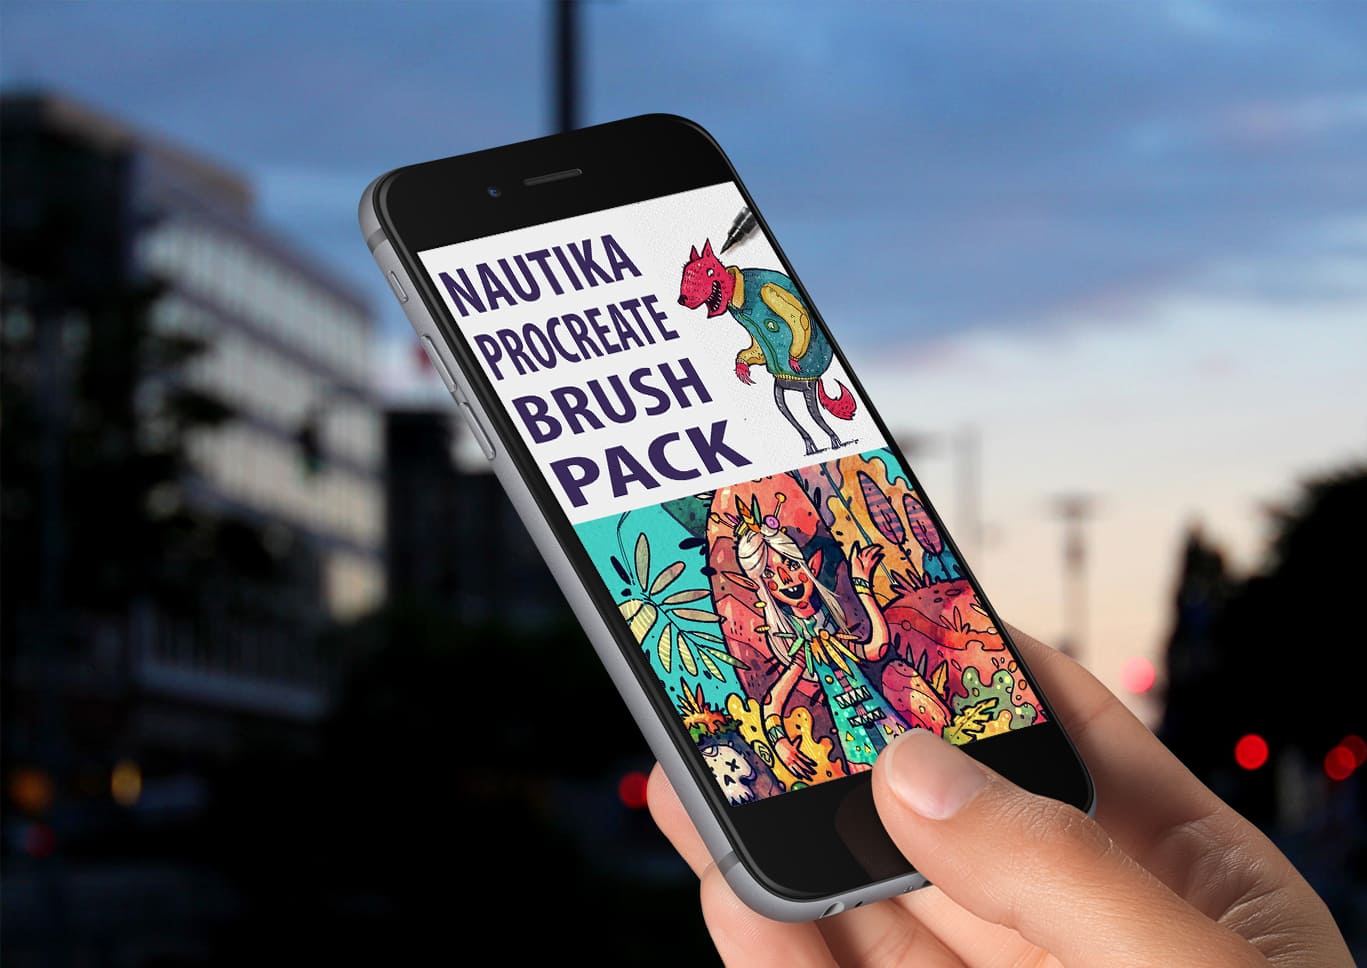 Mobile option of the Nautika Procreate Brush Pack.